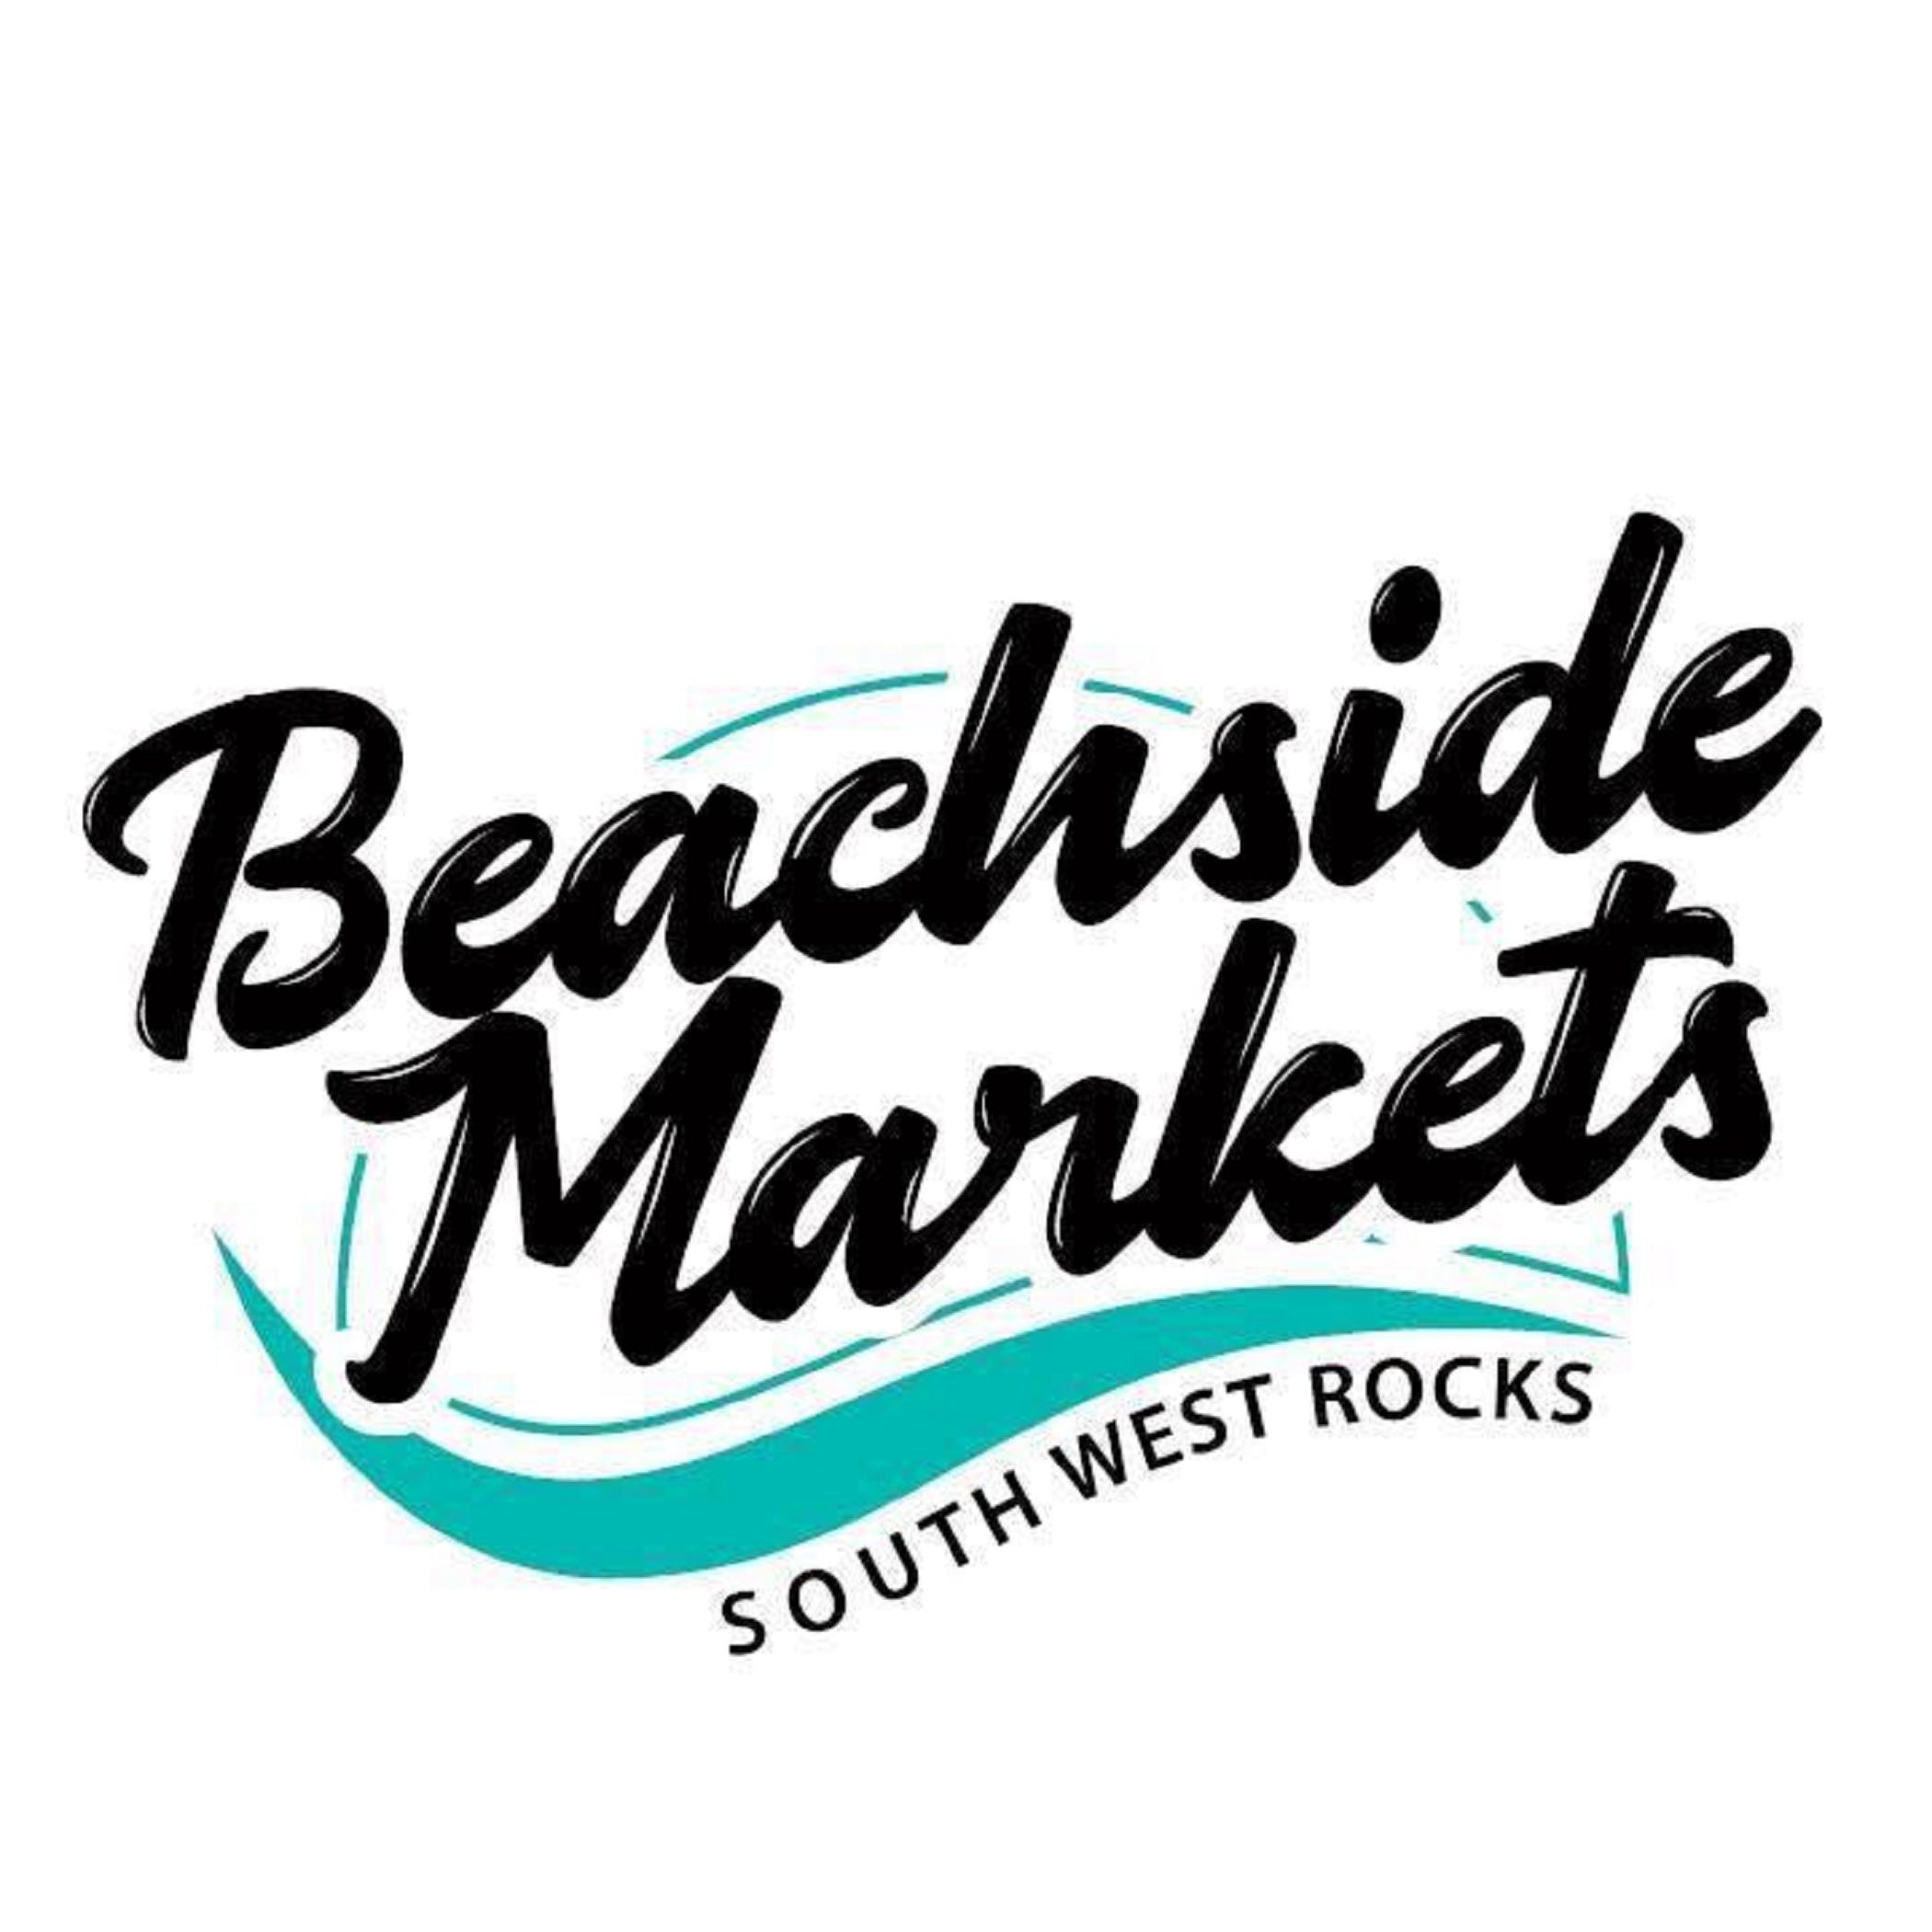 Beachside Markets South West Rocks - Perisher Accommodation